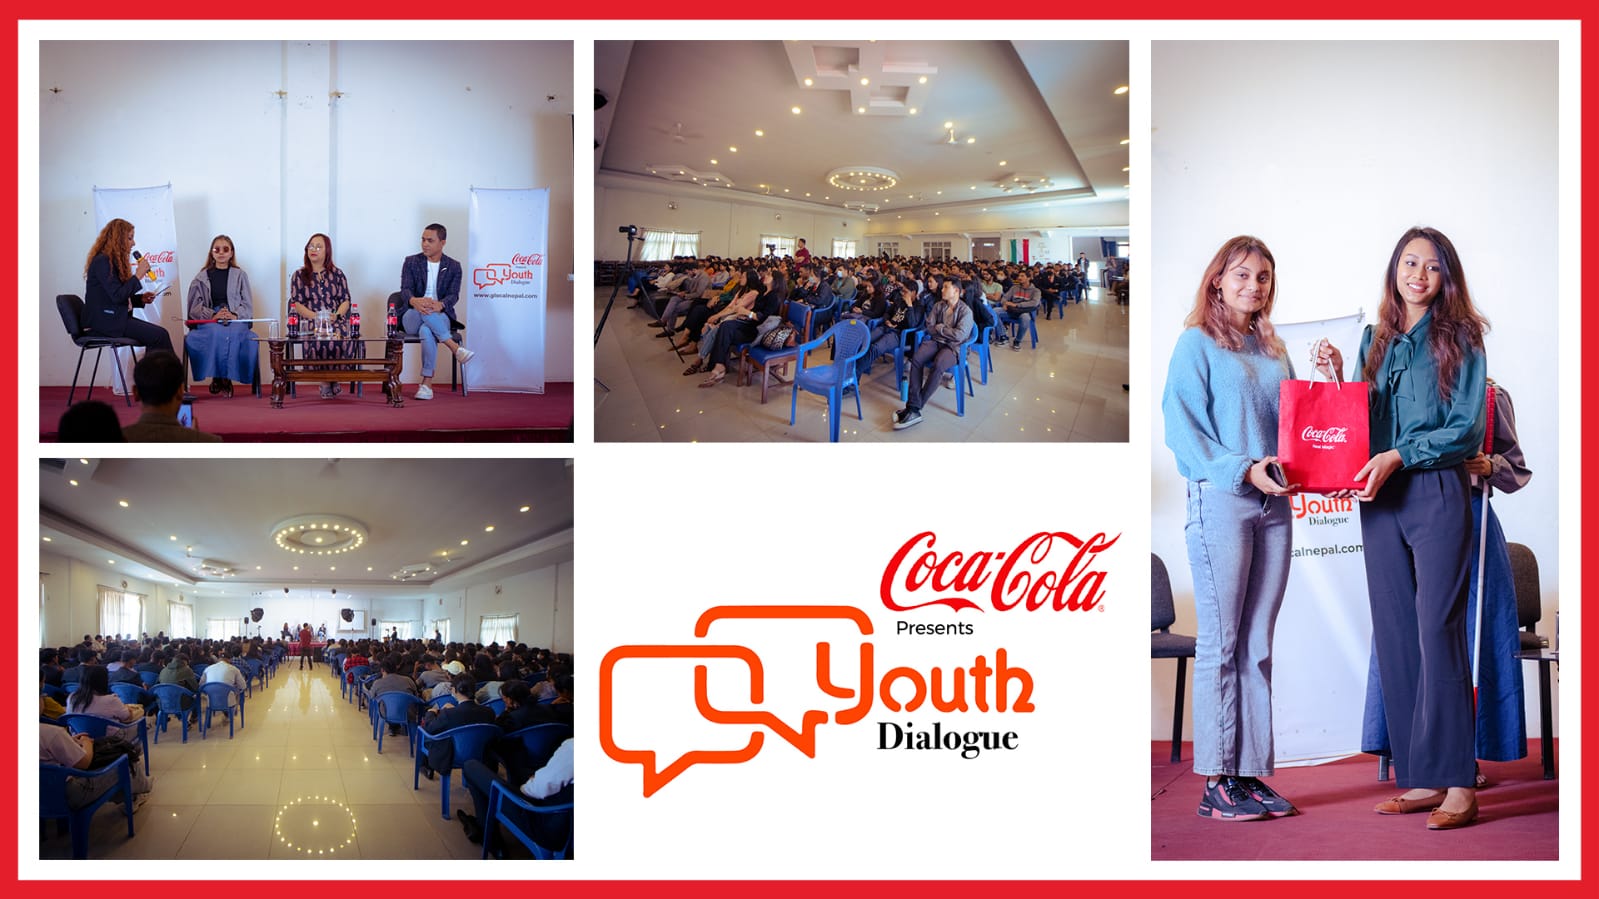 Coca-Cola presents ‘Youth Dialogue’ event